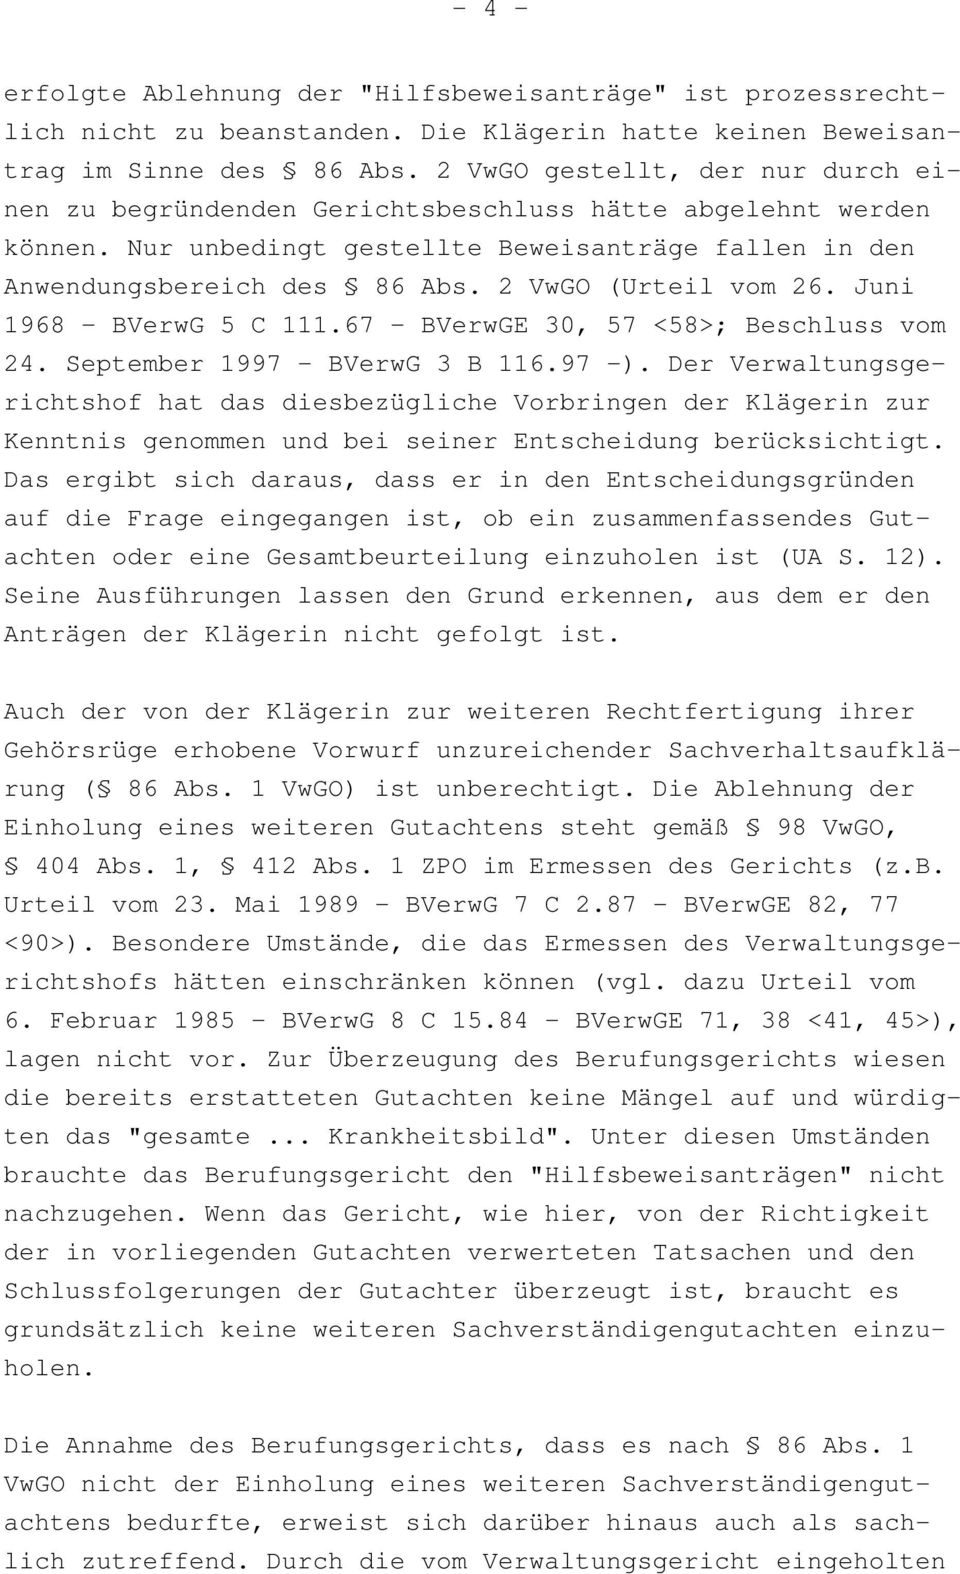 2 VwGO (Urteil vom 26. Juni 1968 - BVerwG 5 C 111.67 - BVerwGE 30, 57 <58>; Beschluss vom 24. September 1997 - BVerwG 3 B 116.97 -).